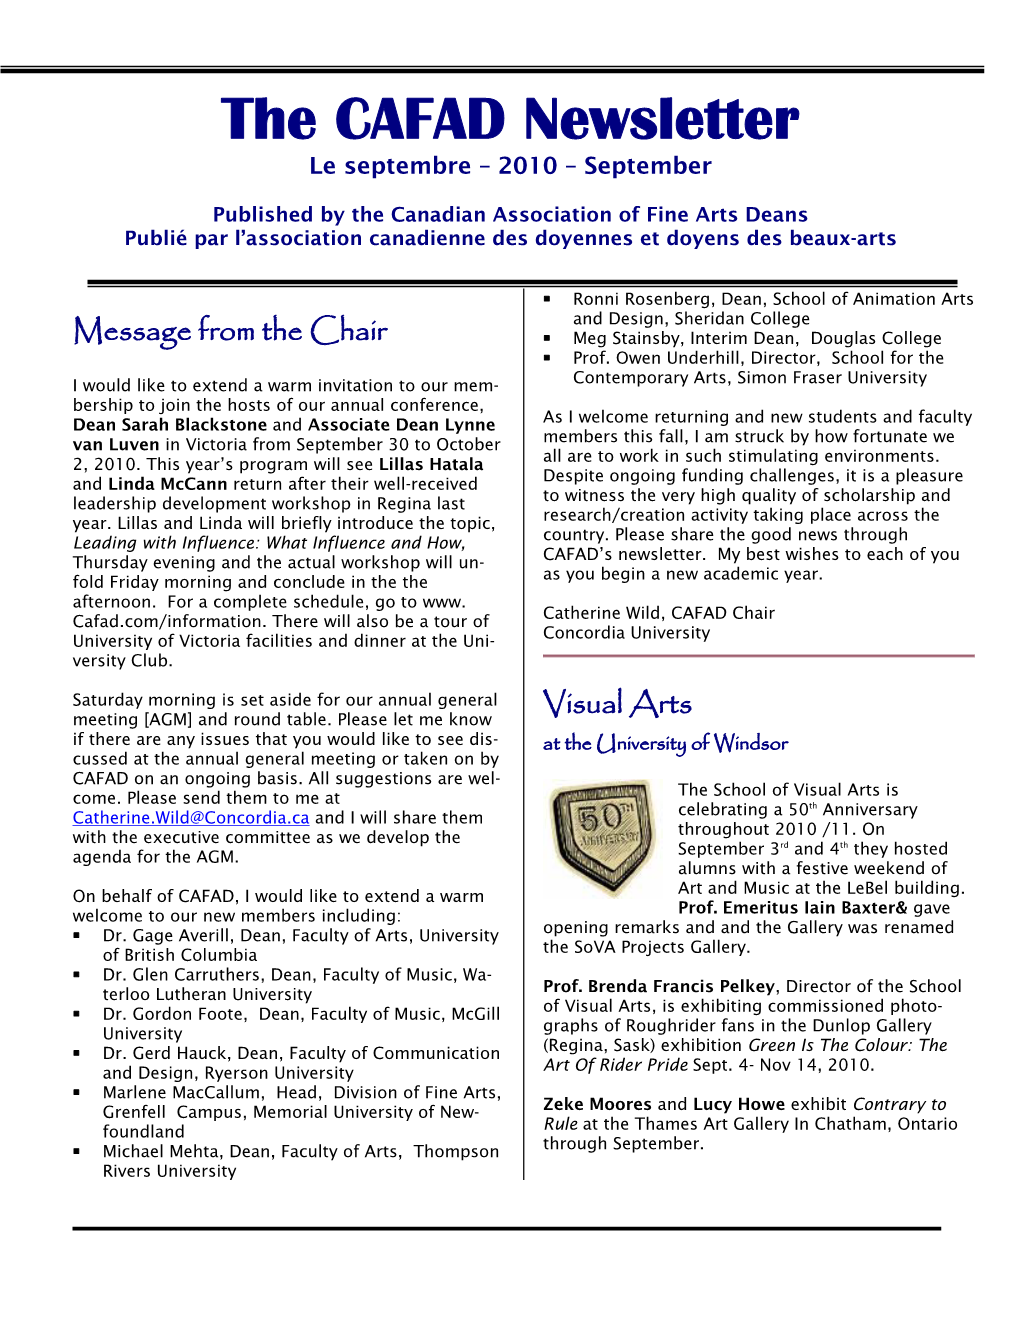 The CAFAD Newsletter Le Septembre – 2010 – September